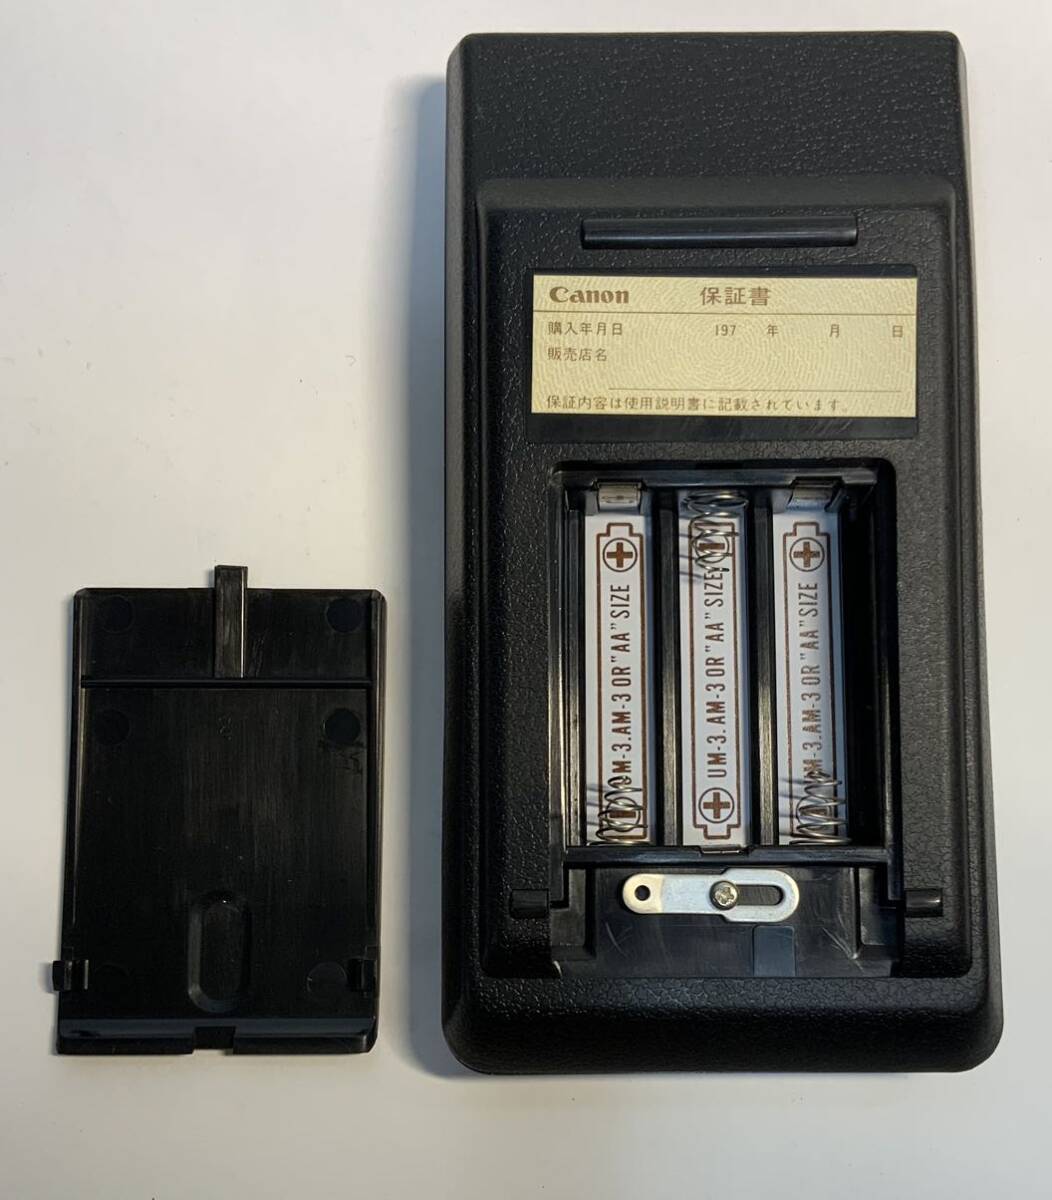 CANON キャノン キヤノン Palmtronic F-6 関数電卓 計算機 カバー説明書付 1970年代昭和レトロ ビンテージ 蛍光表示管 パームトロニク/467の画像6